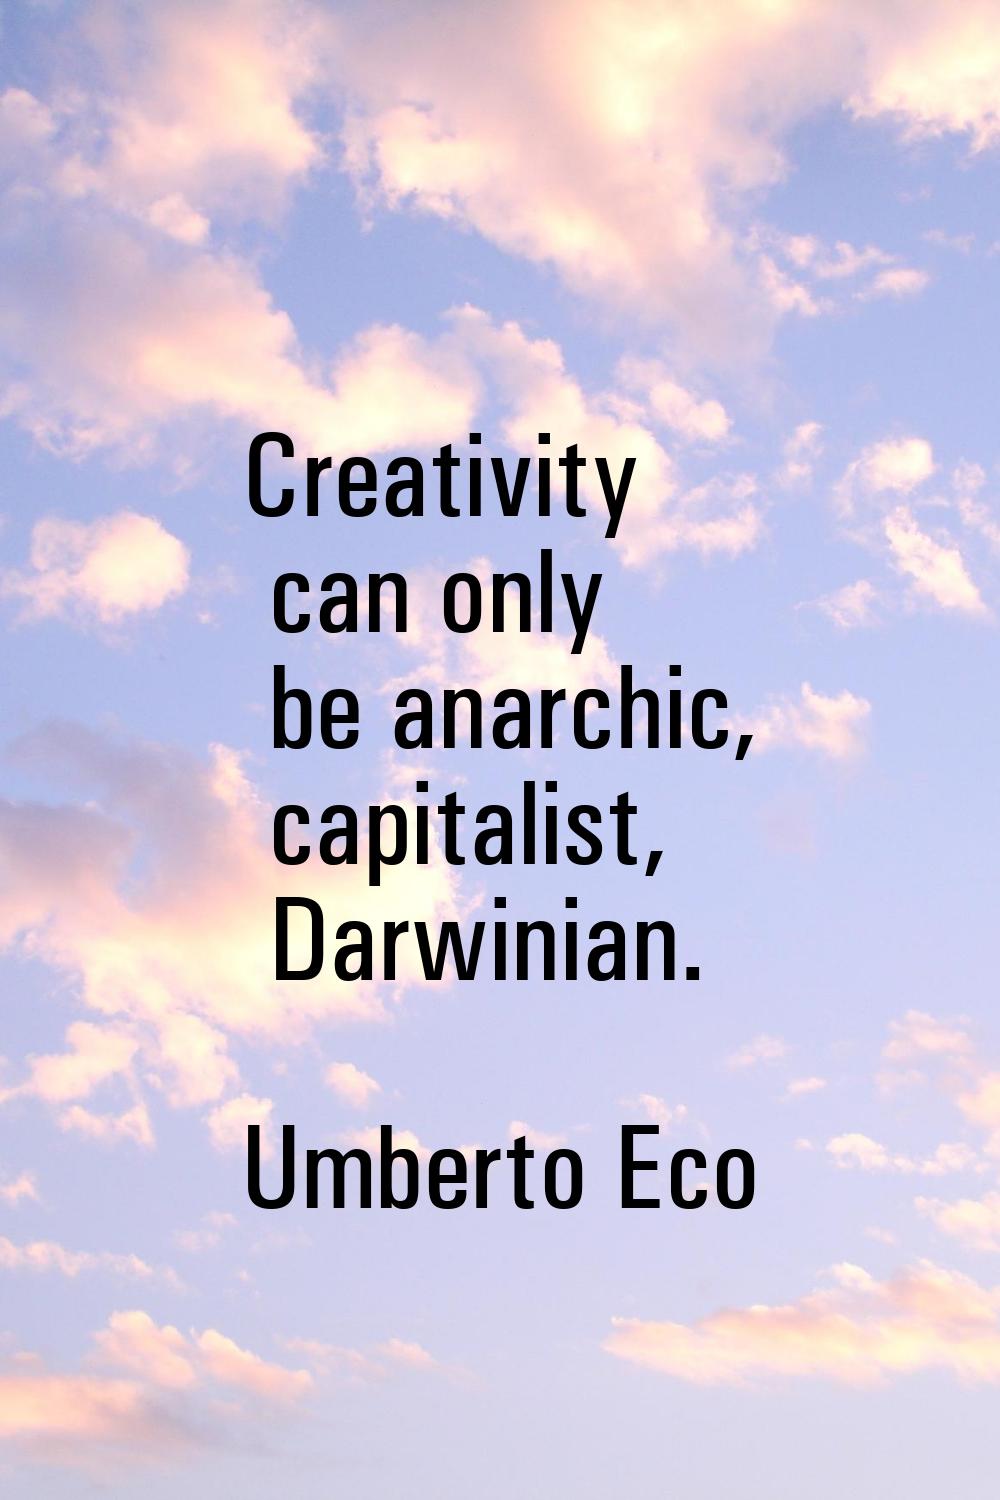 Creativity can only be anarchic, capitalist, Darwinian.